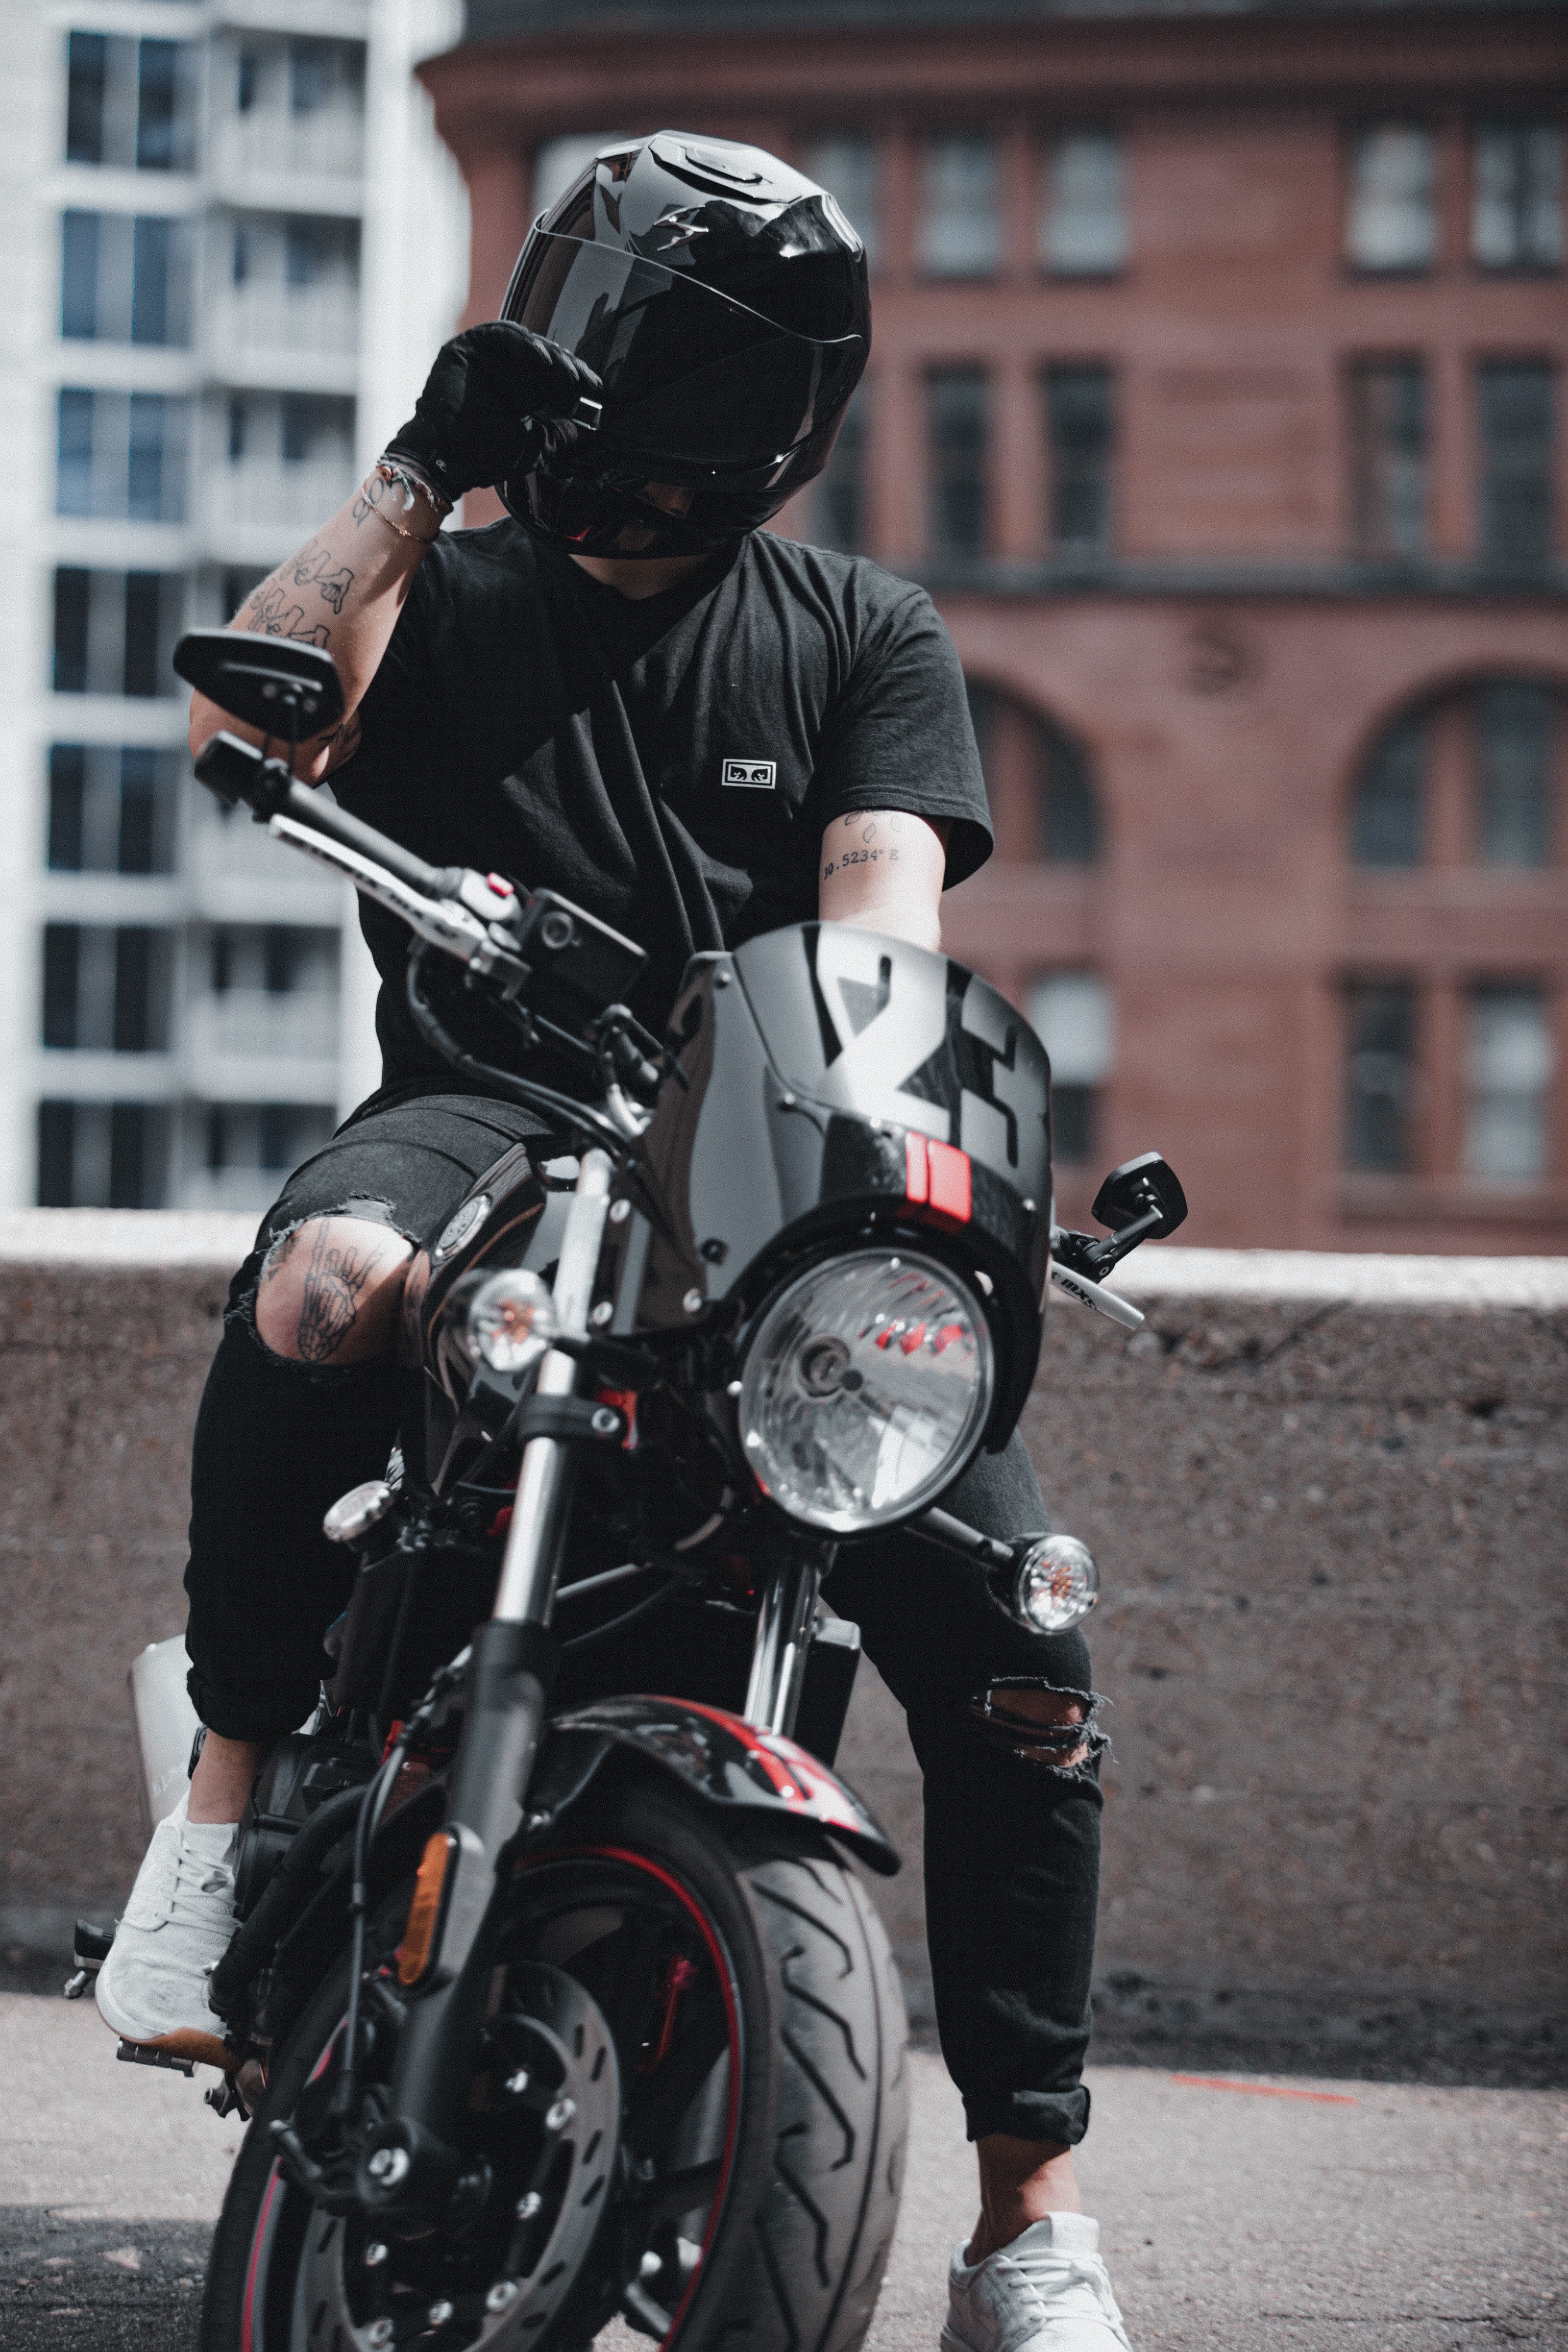 bike, motorcyclist, motorcycles, front view, helmet, motorcycle